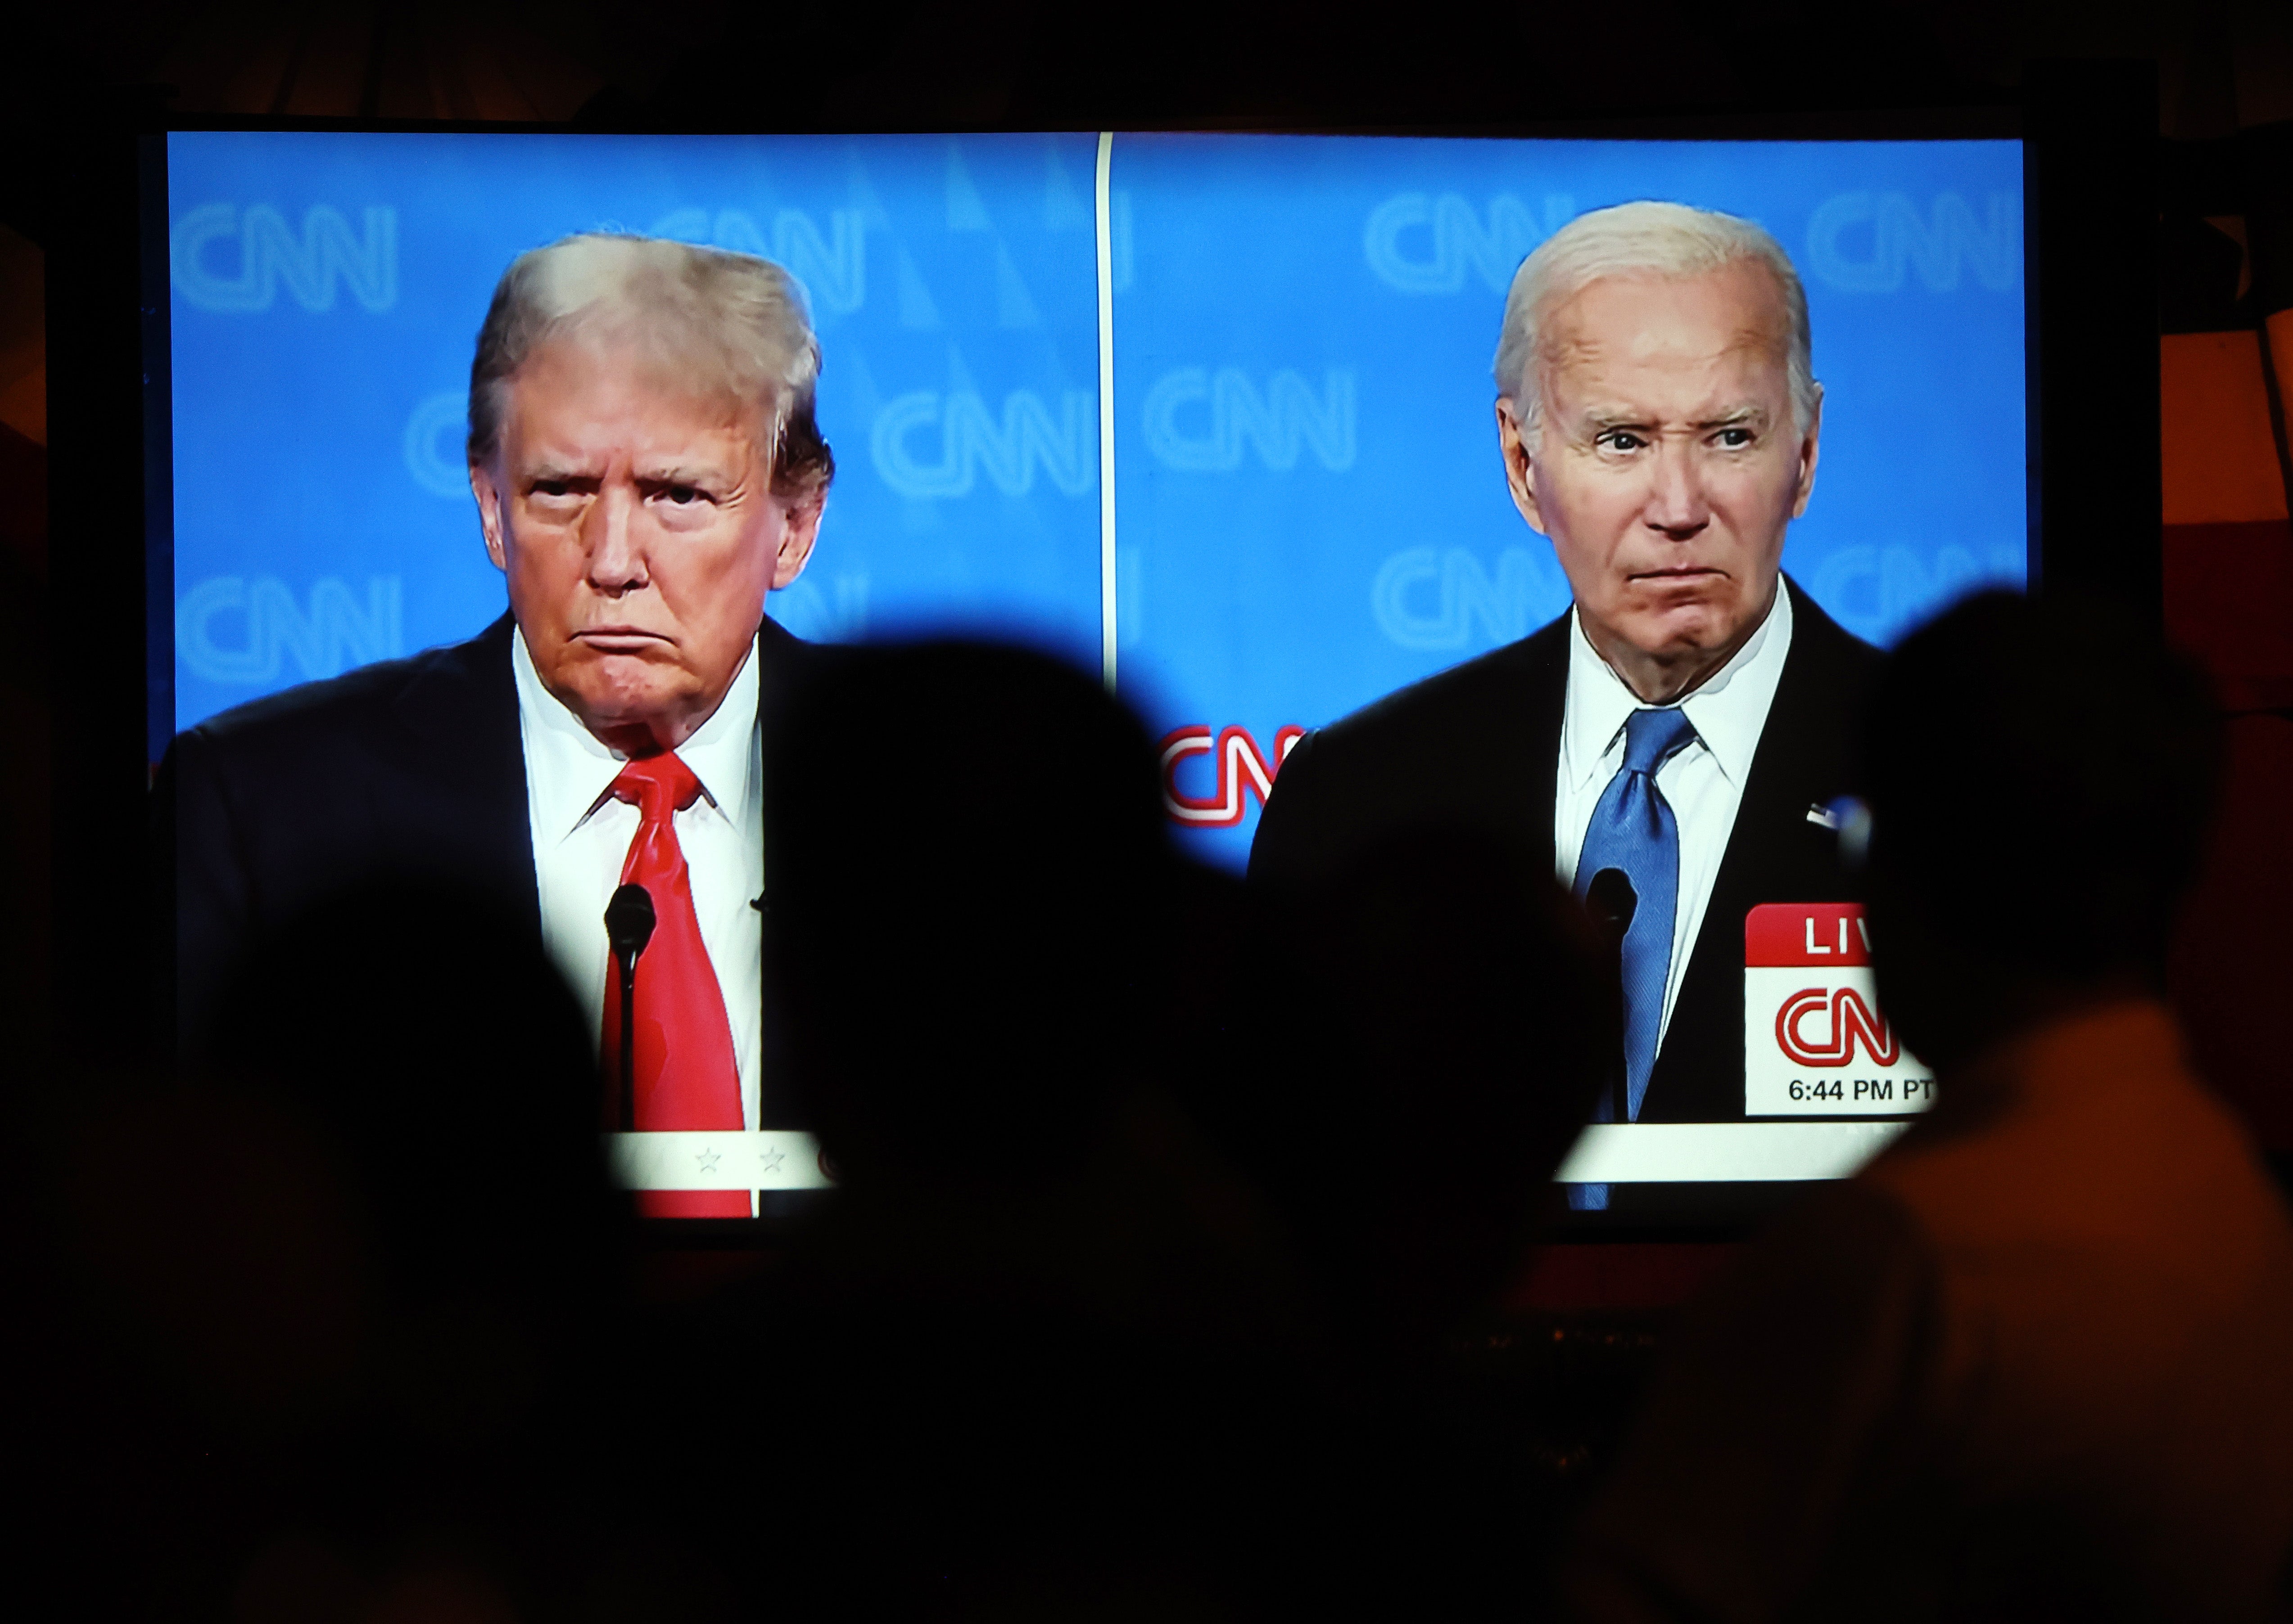 People watch the presidential debate between Joe Biden and Donald Trump at a watch party in Los Angeles, California